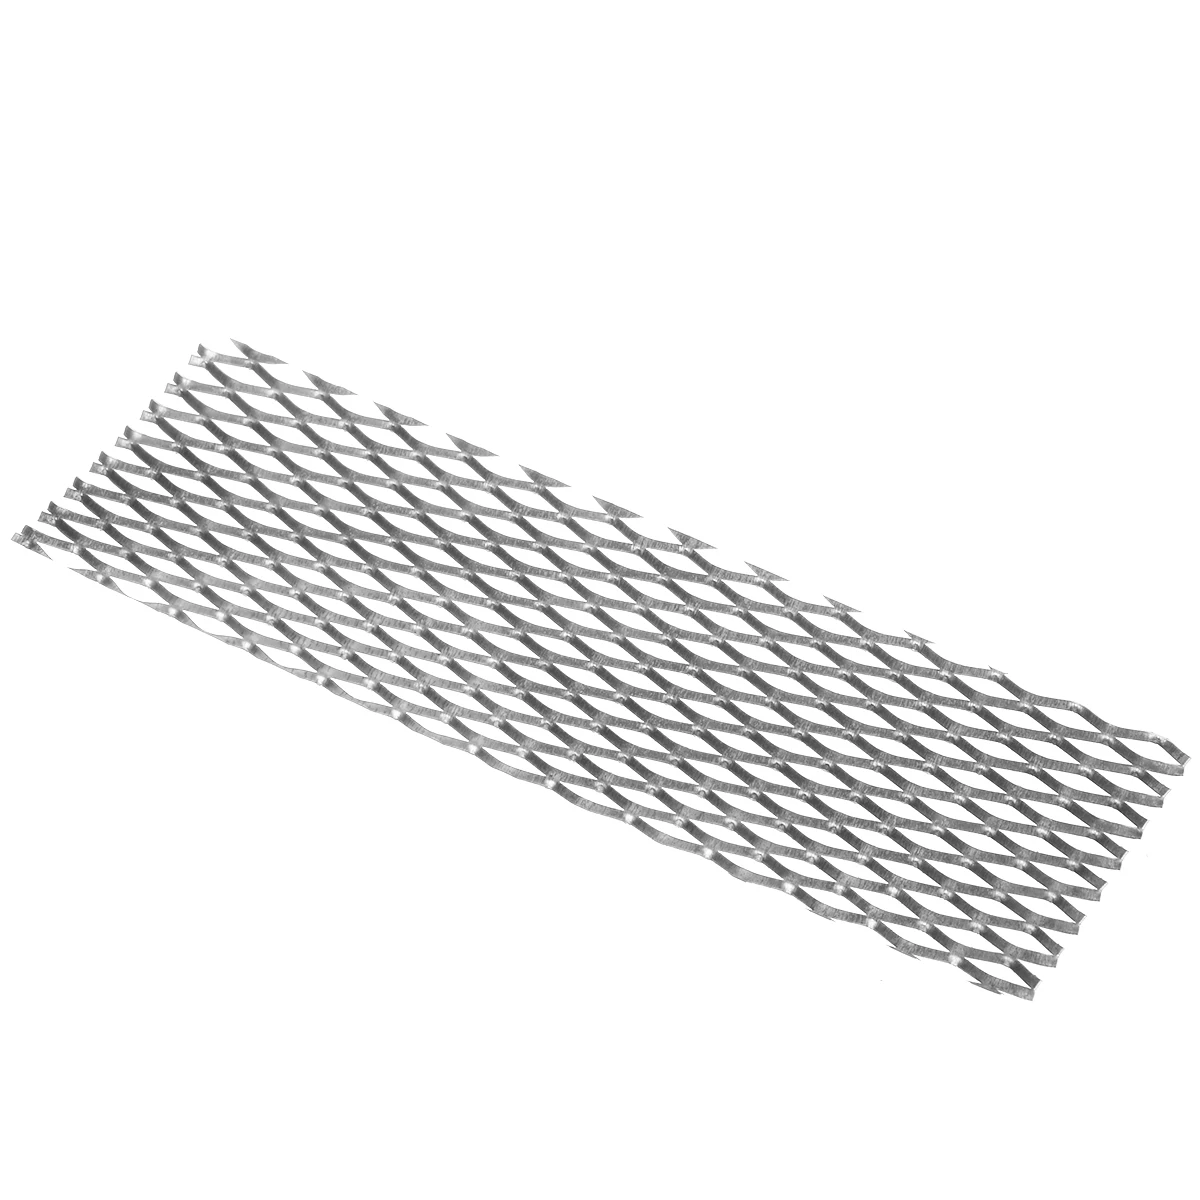 1pc Electrode Pure Titanium Mesh Sheet Recycled Metal Titanium Mesh Sheet For Electrolysis 0.5 mm Thickness